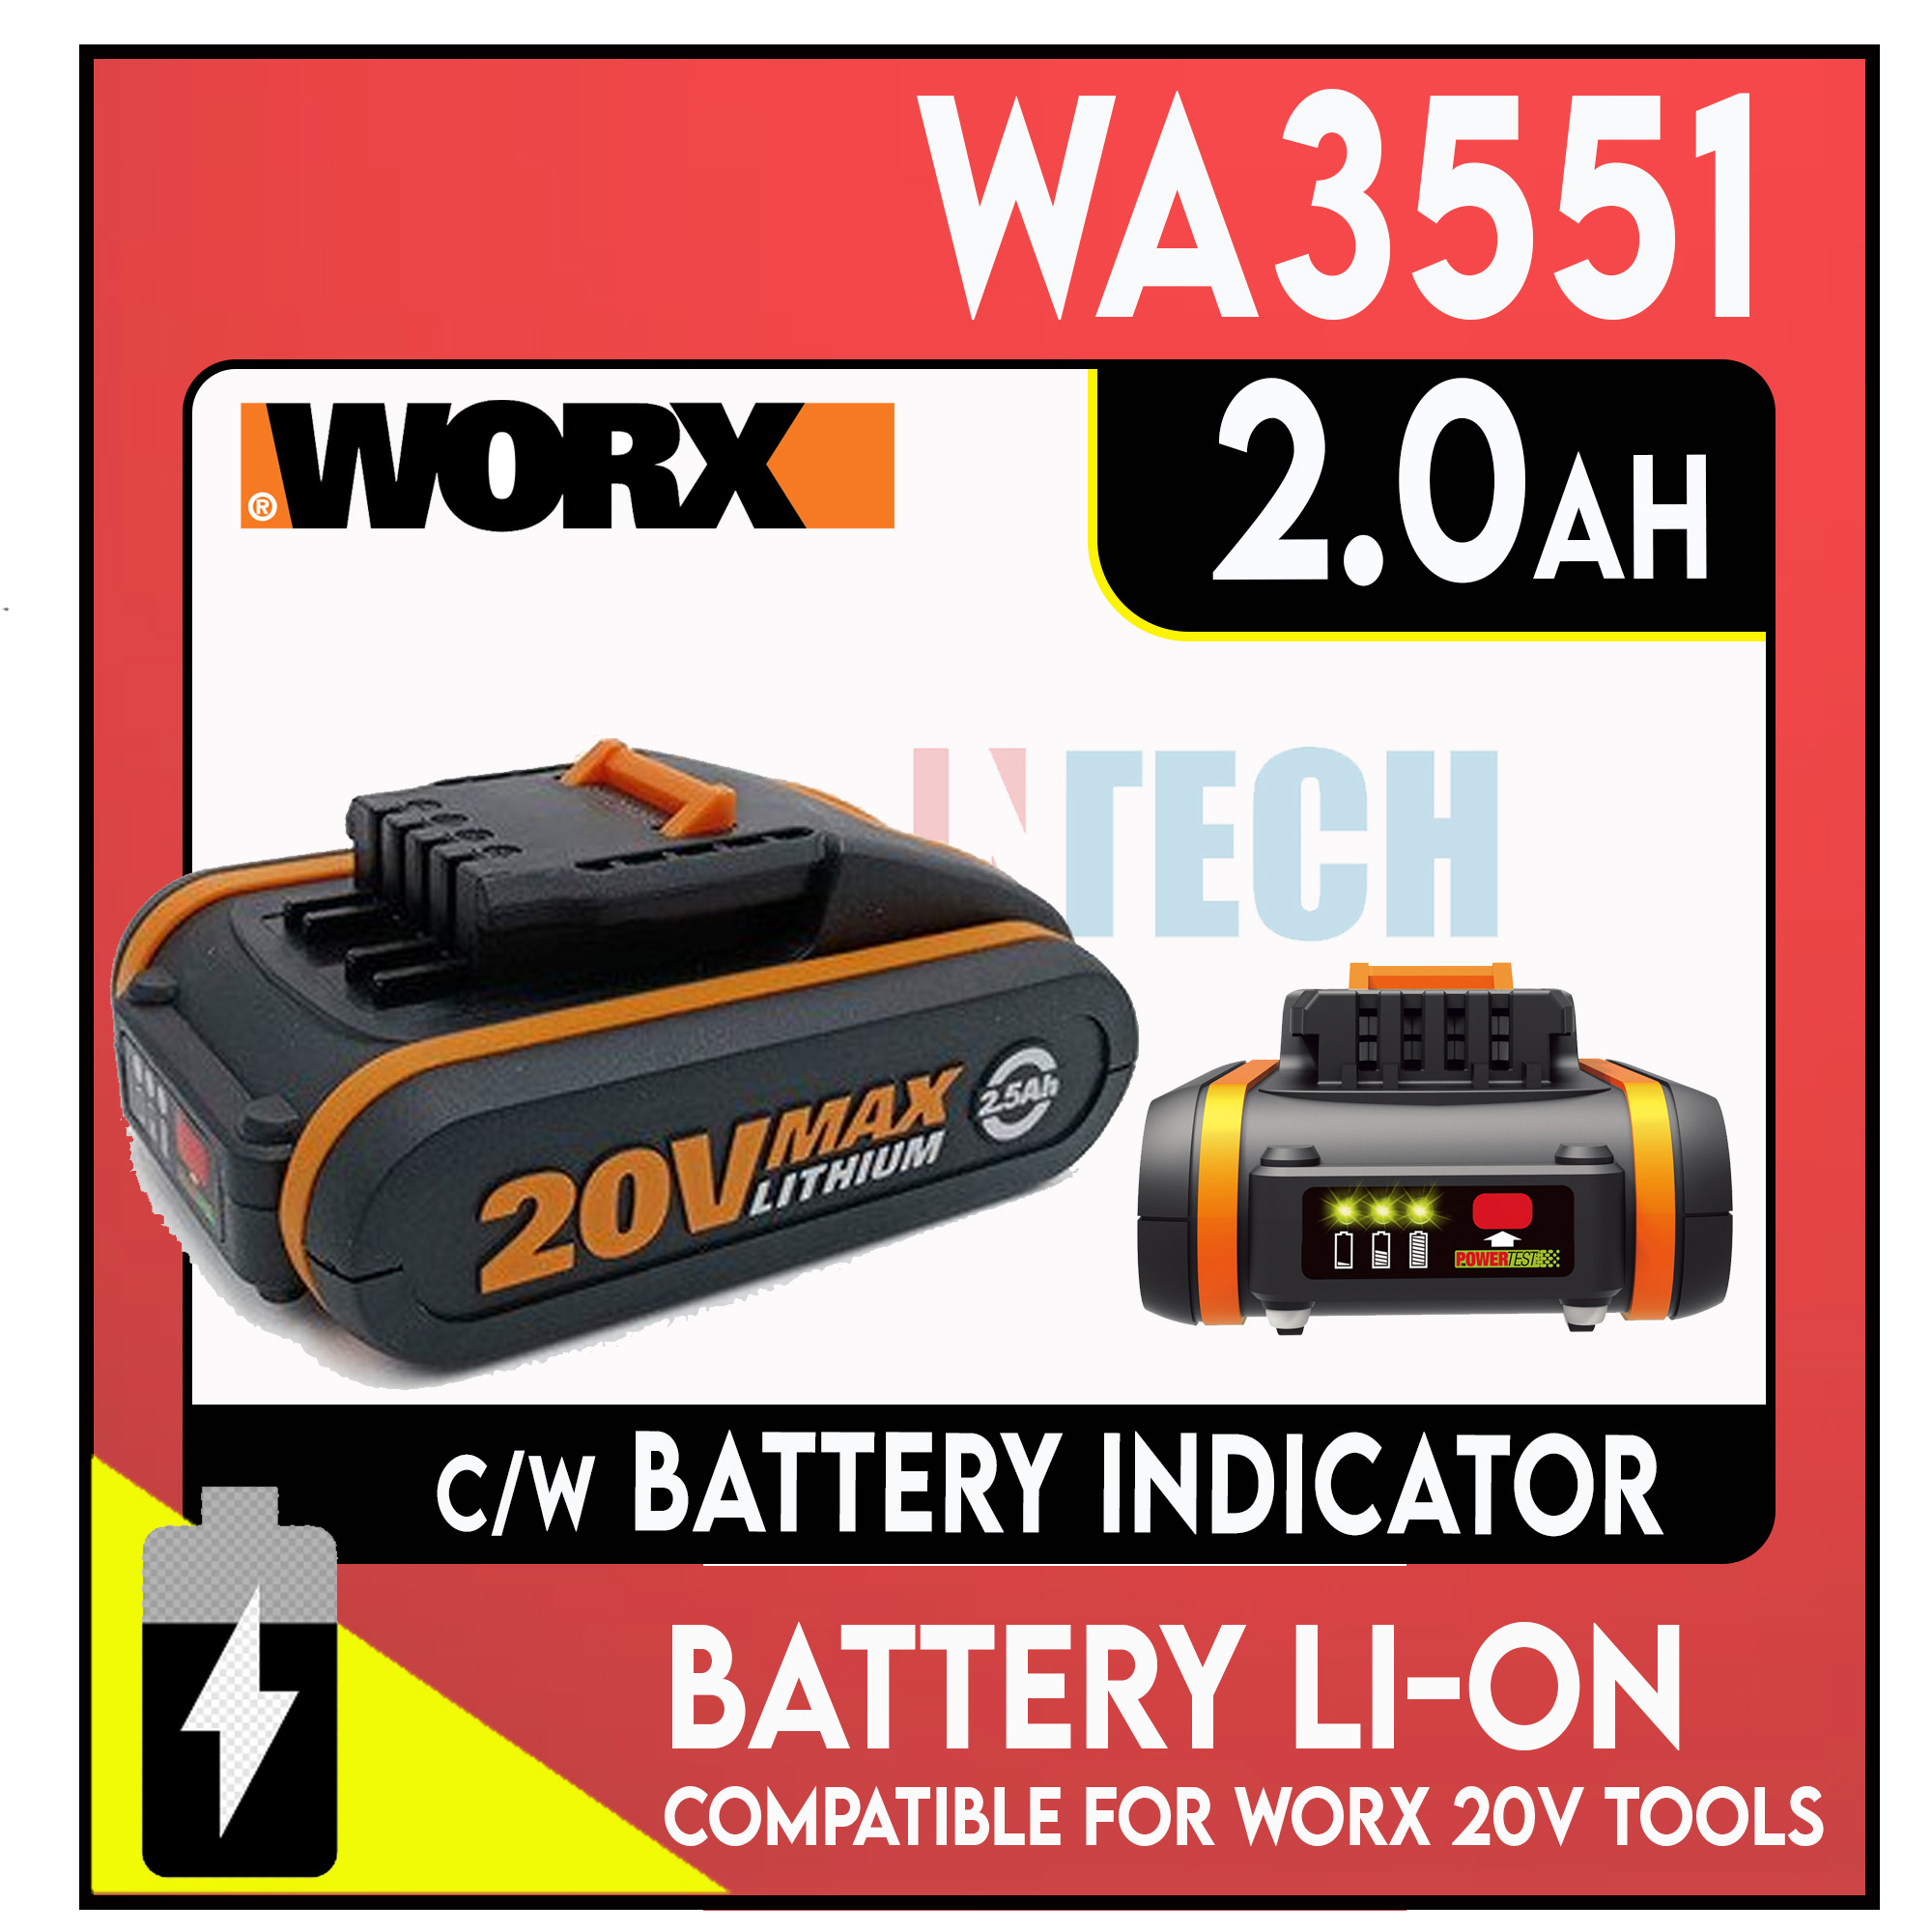 WORX WA3551.1 Battery 20V 2.0Ah Li-ion battery pack